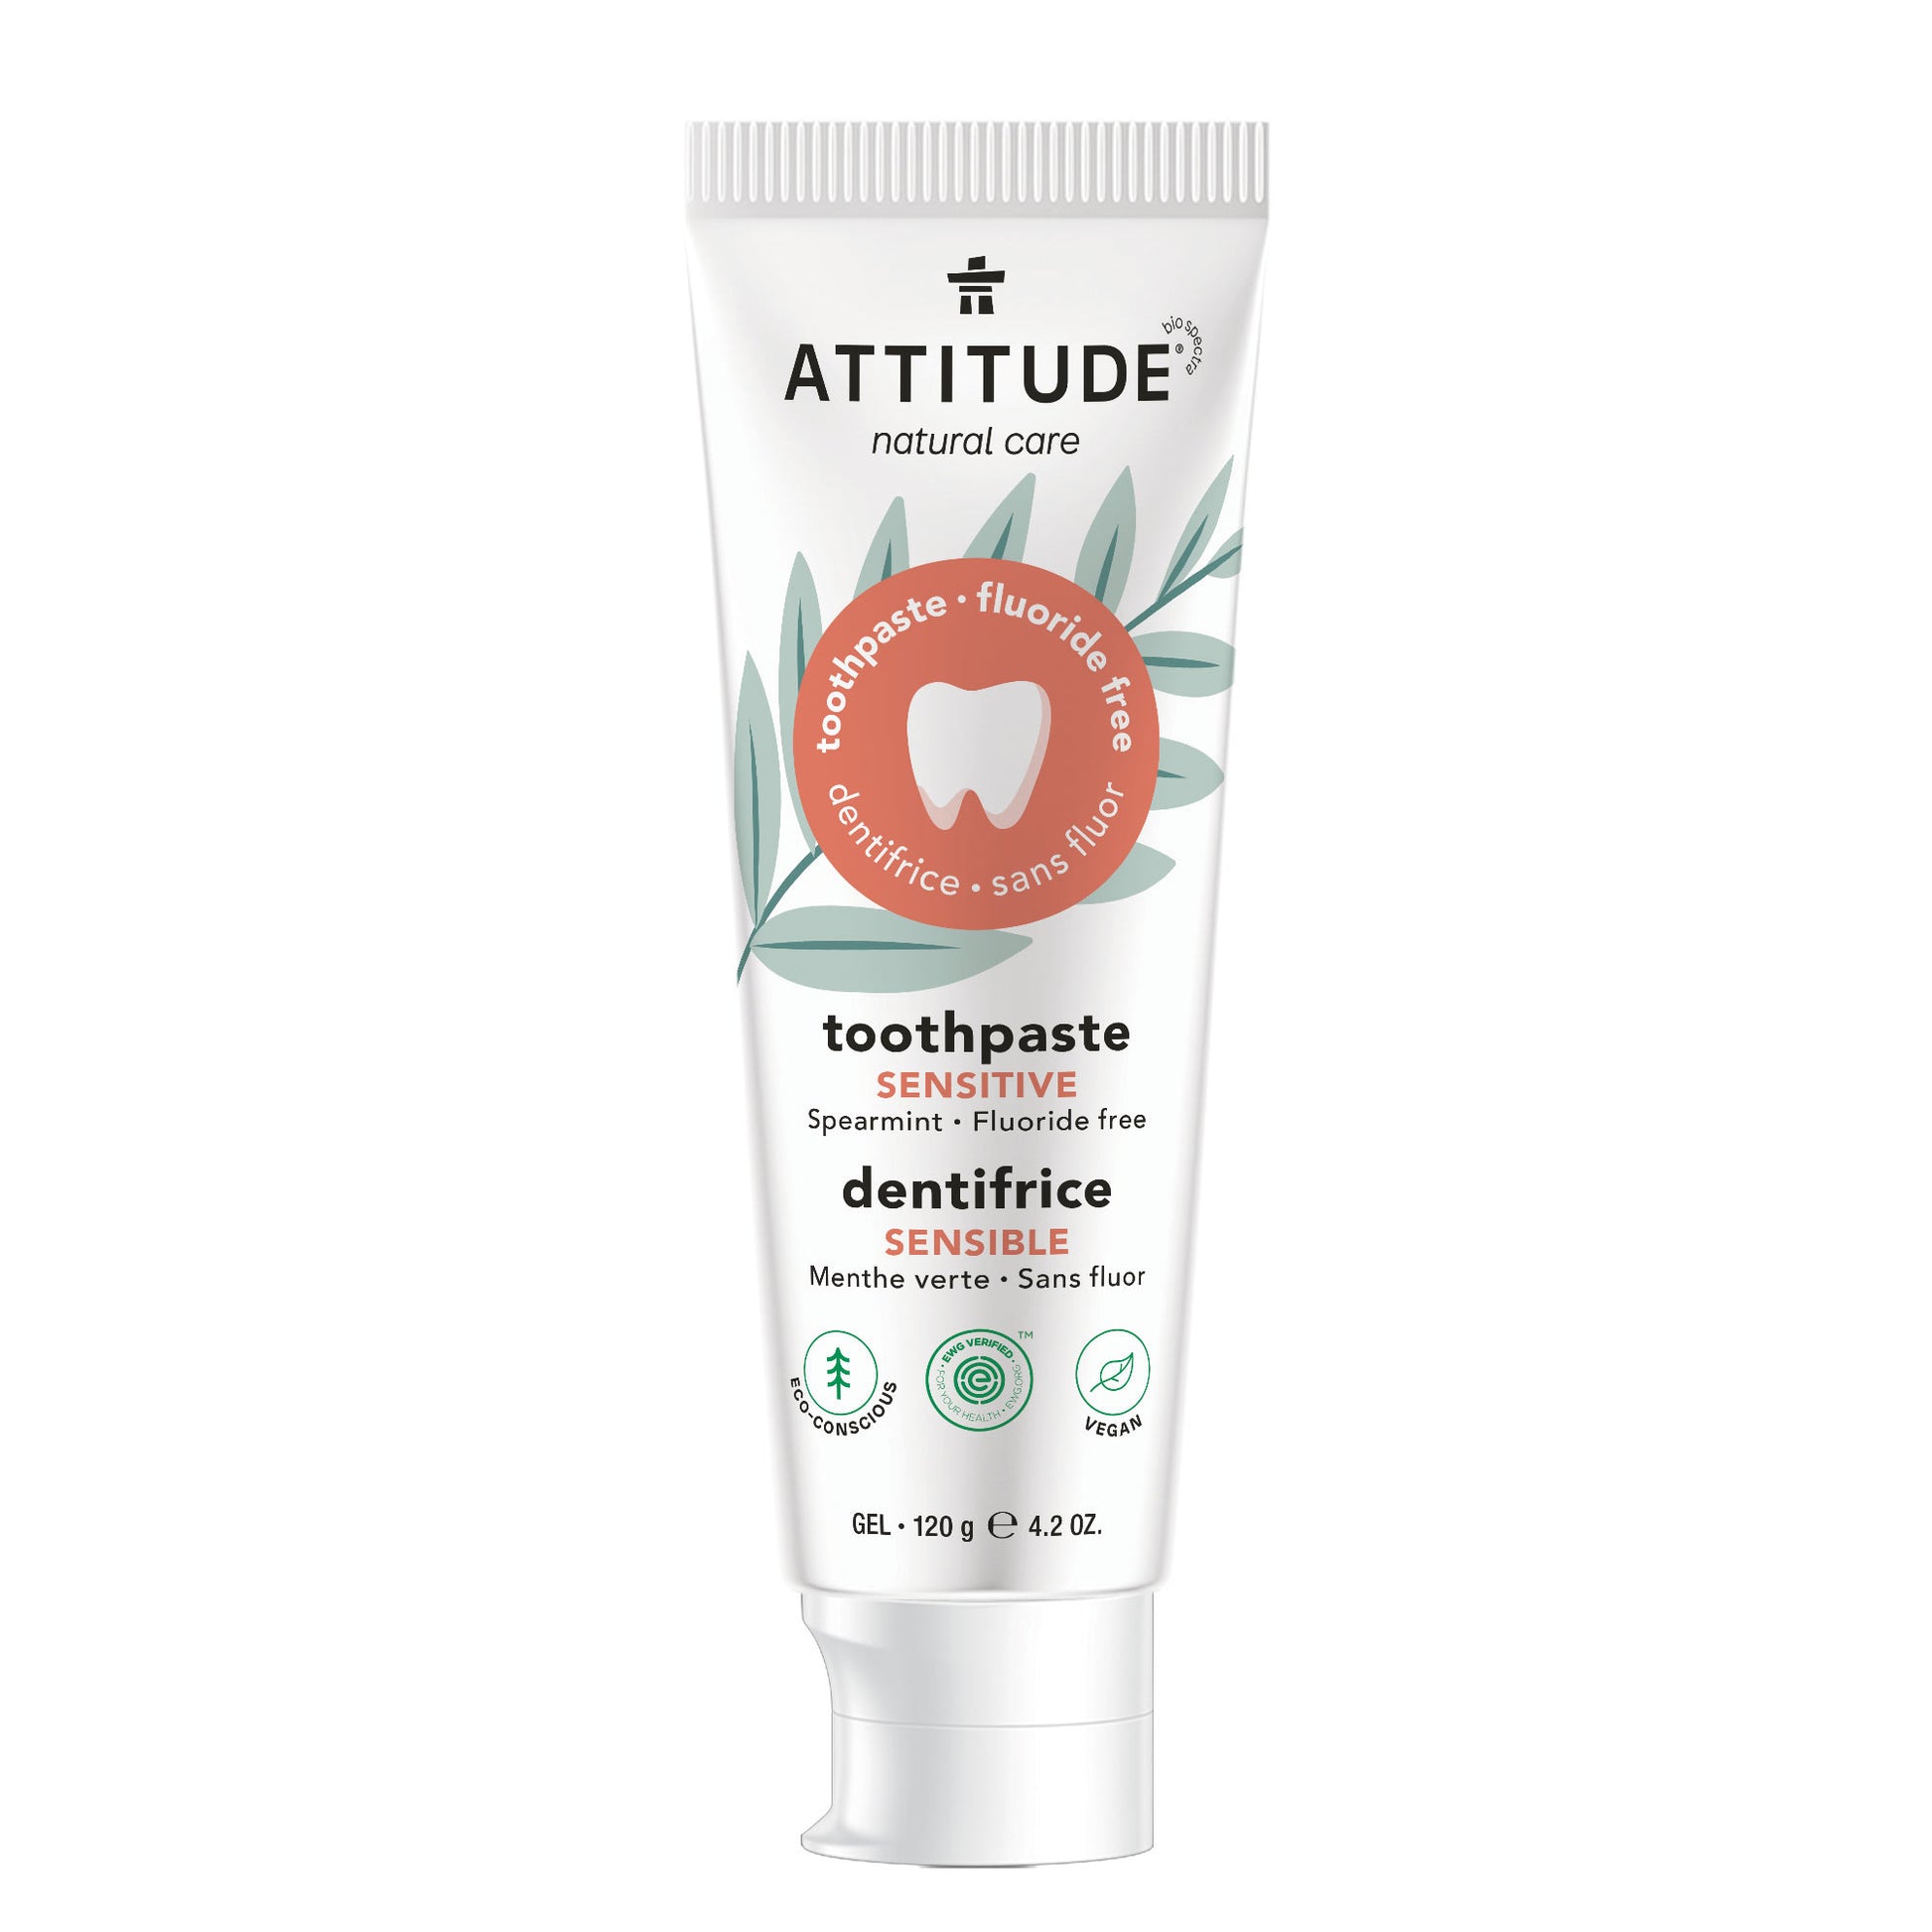 ATTITUDE Fluoride Free Adult Toothpaste : Sensitive_en?_main?